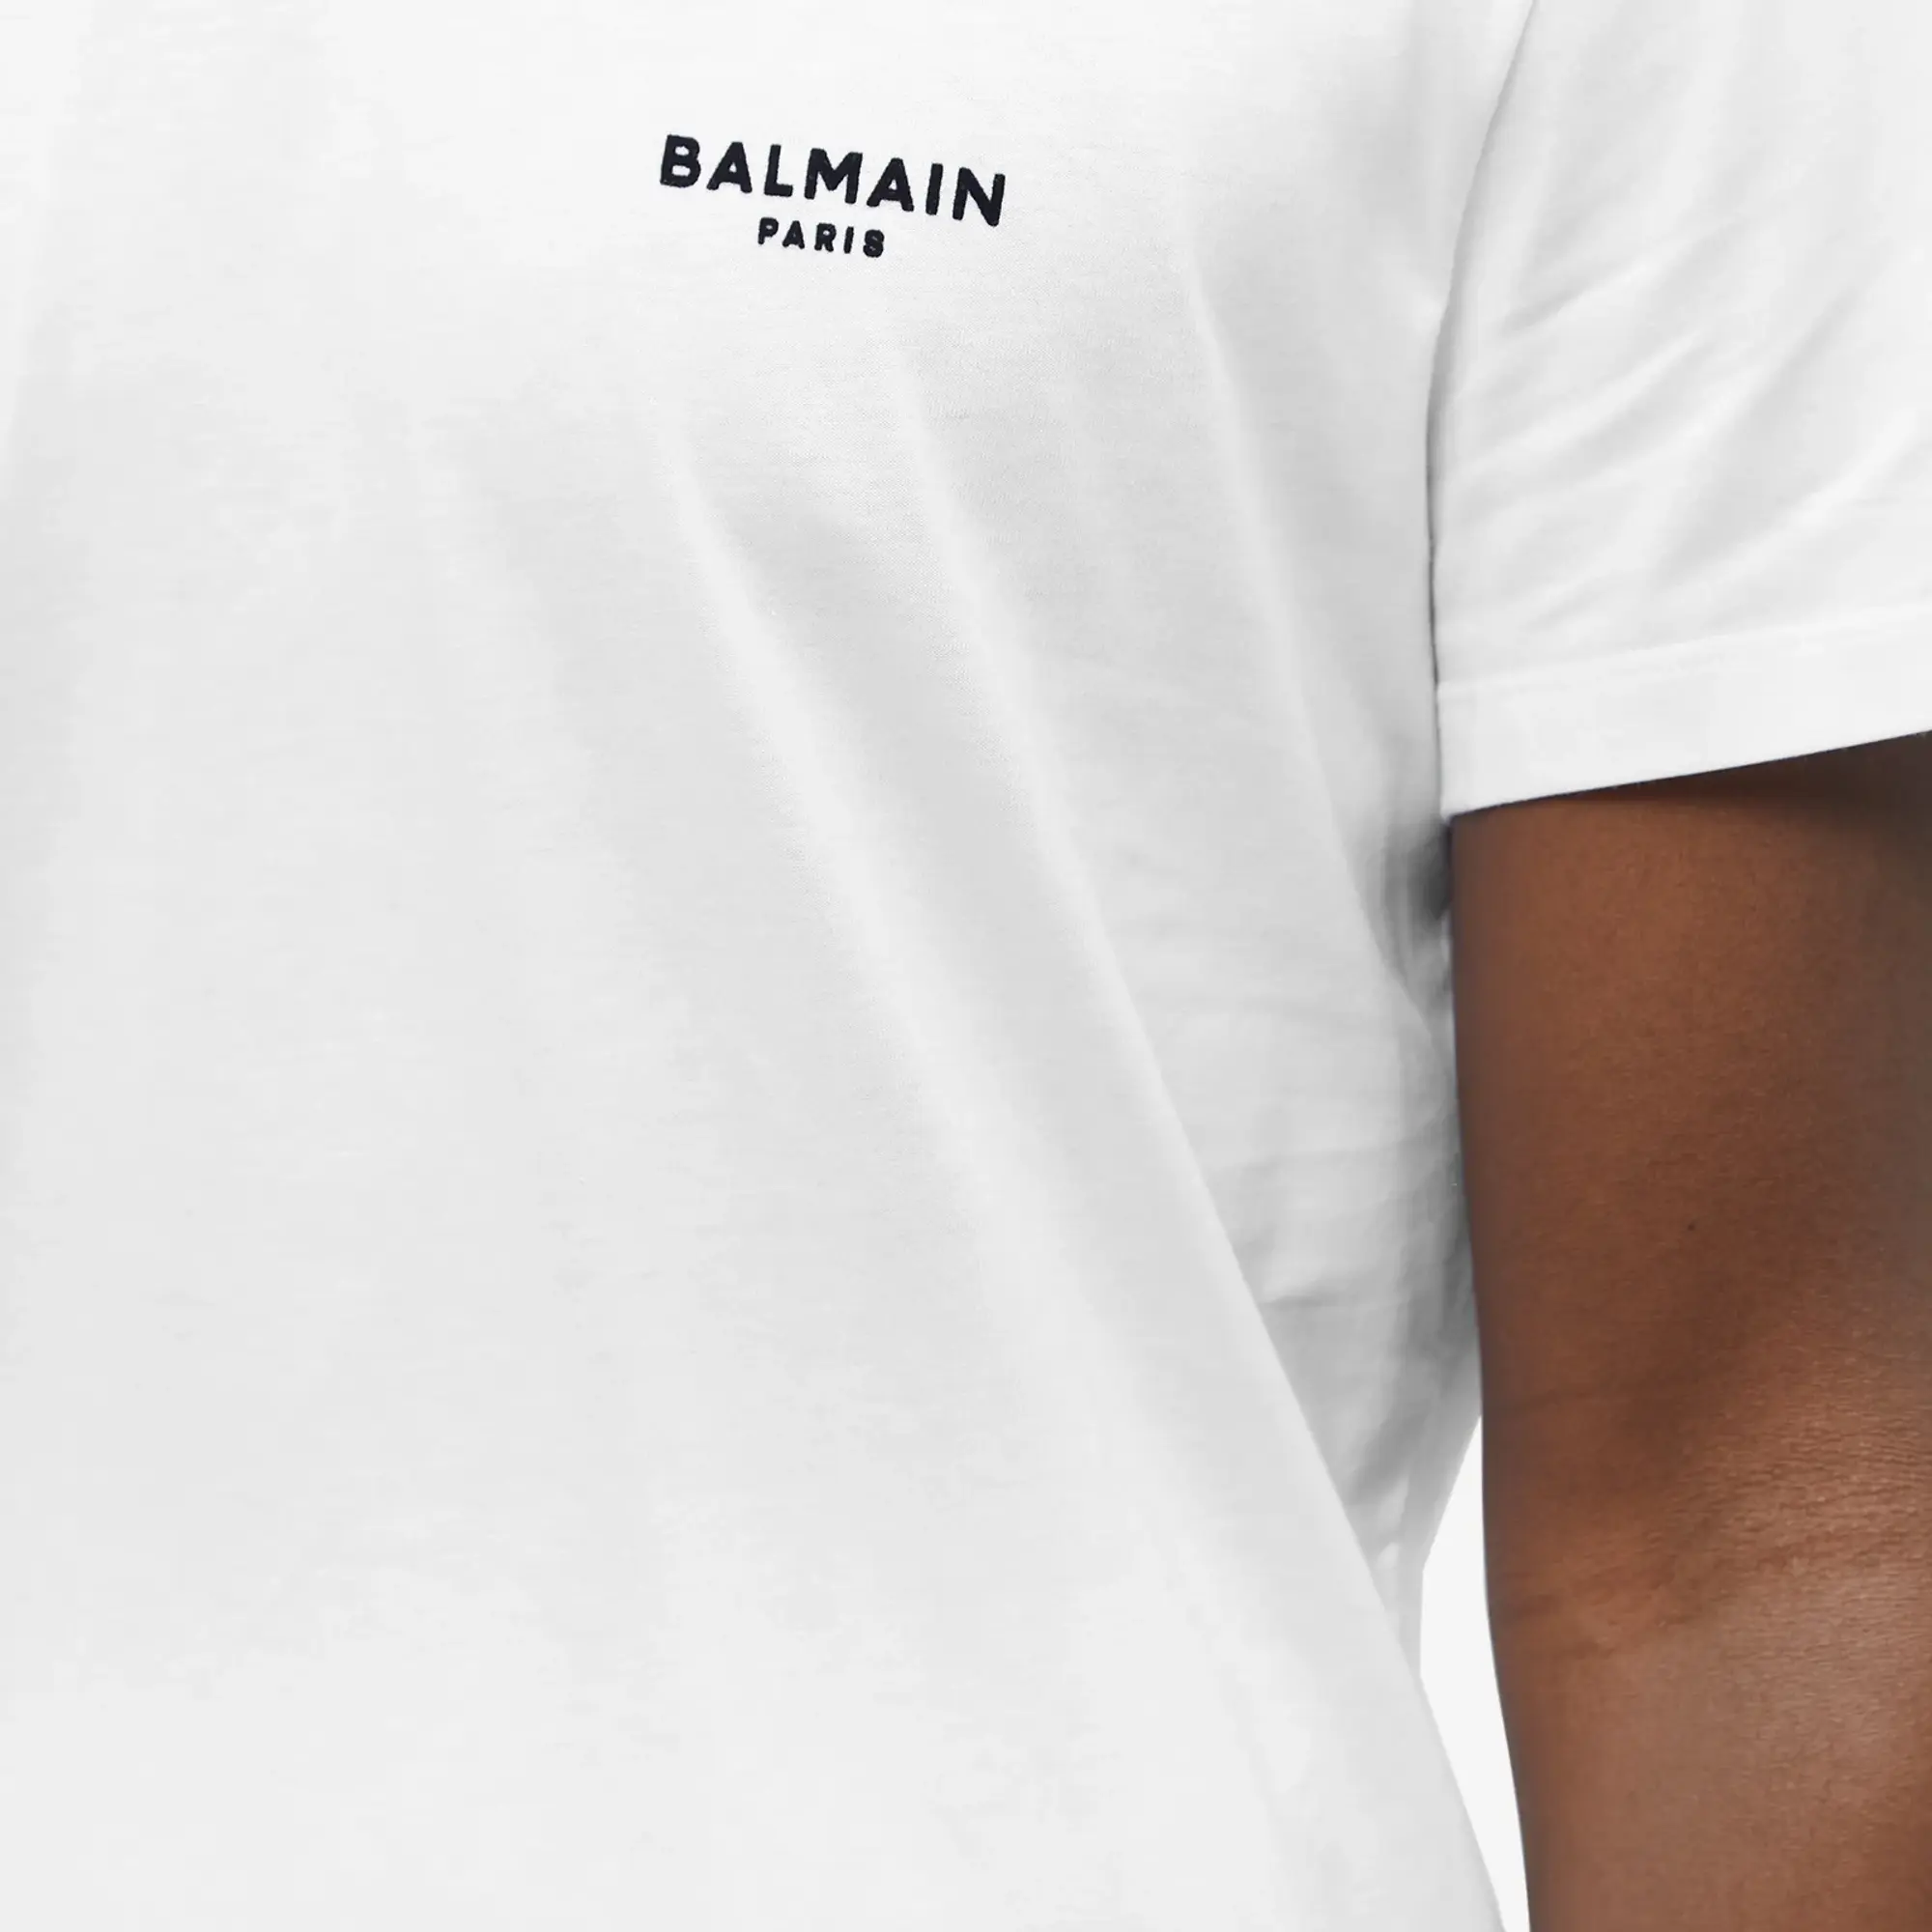 Balmain Men's Flock Small Logo T-Shirt White/Black